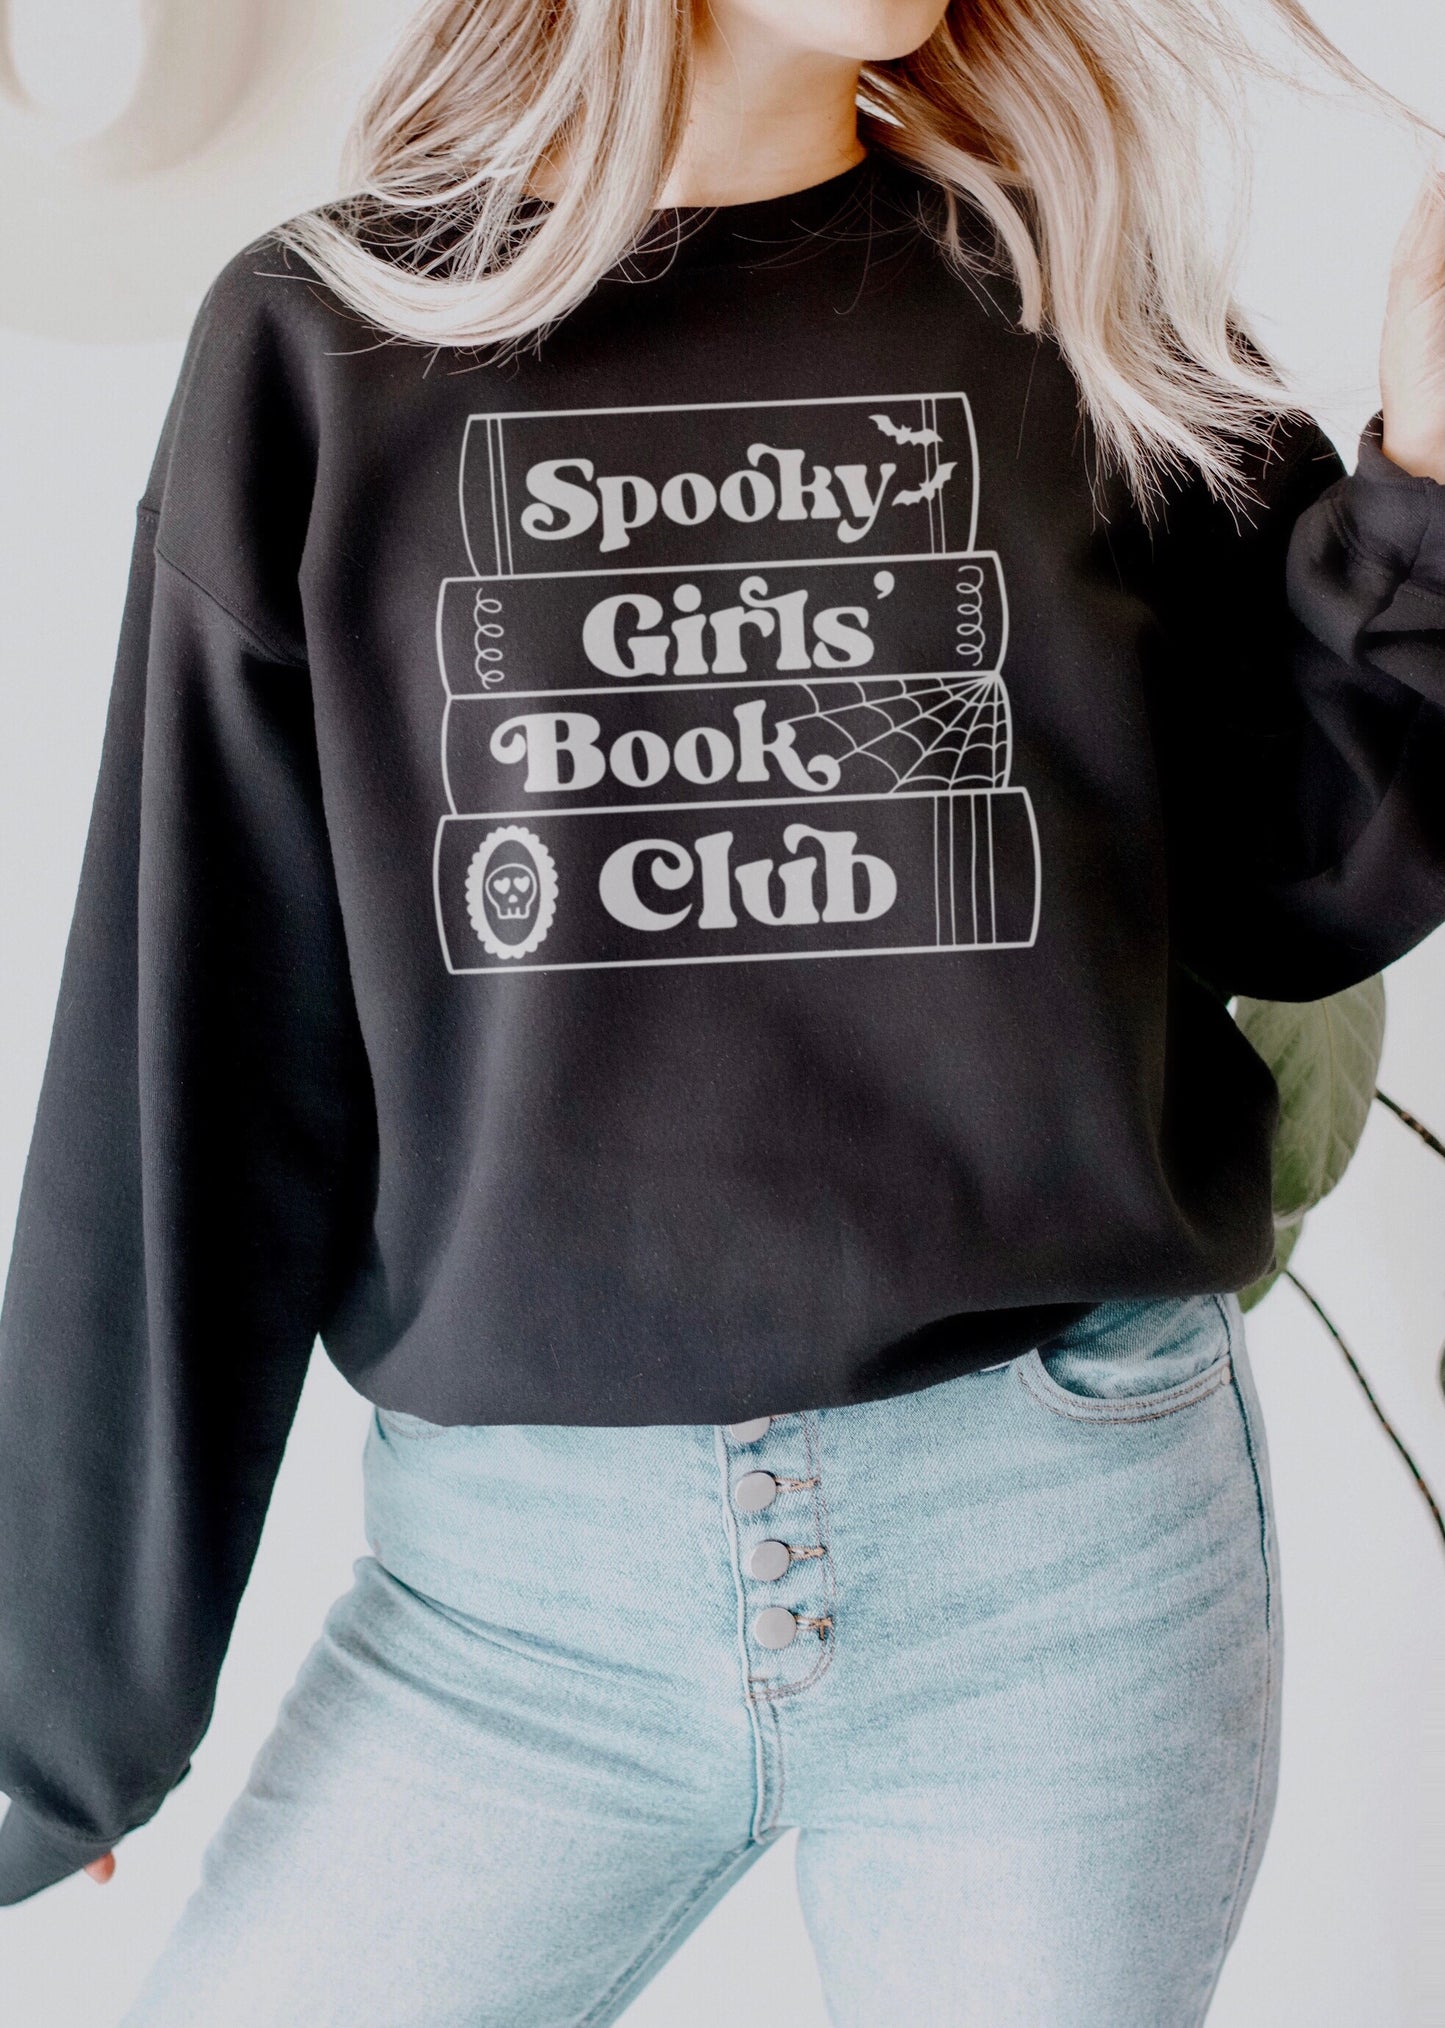 Spooky Girls Book Club SVG Digital Download Design File